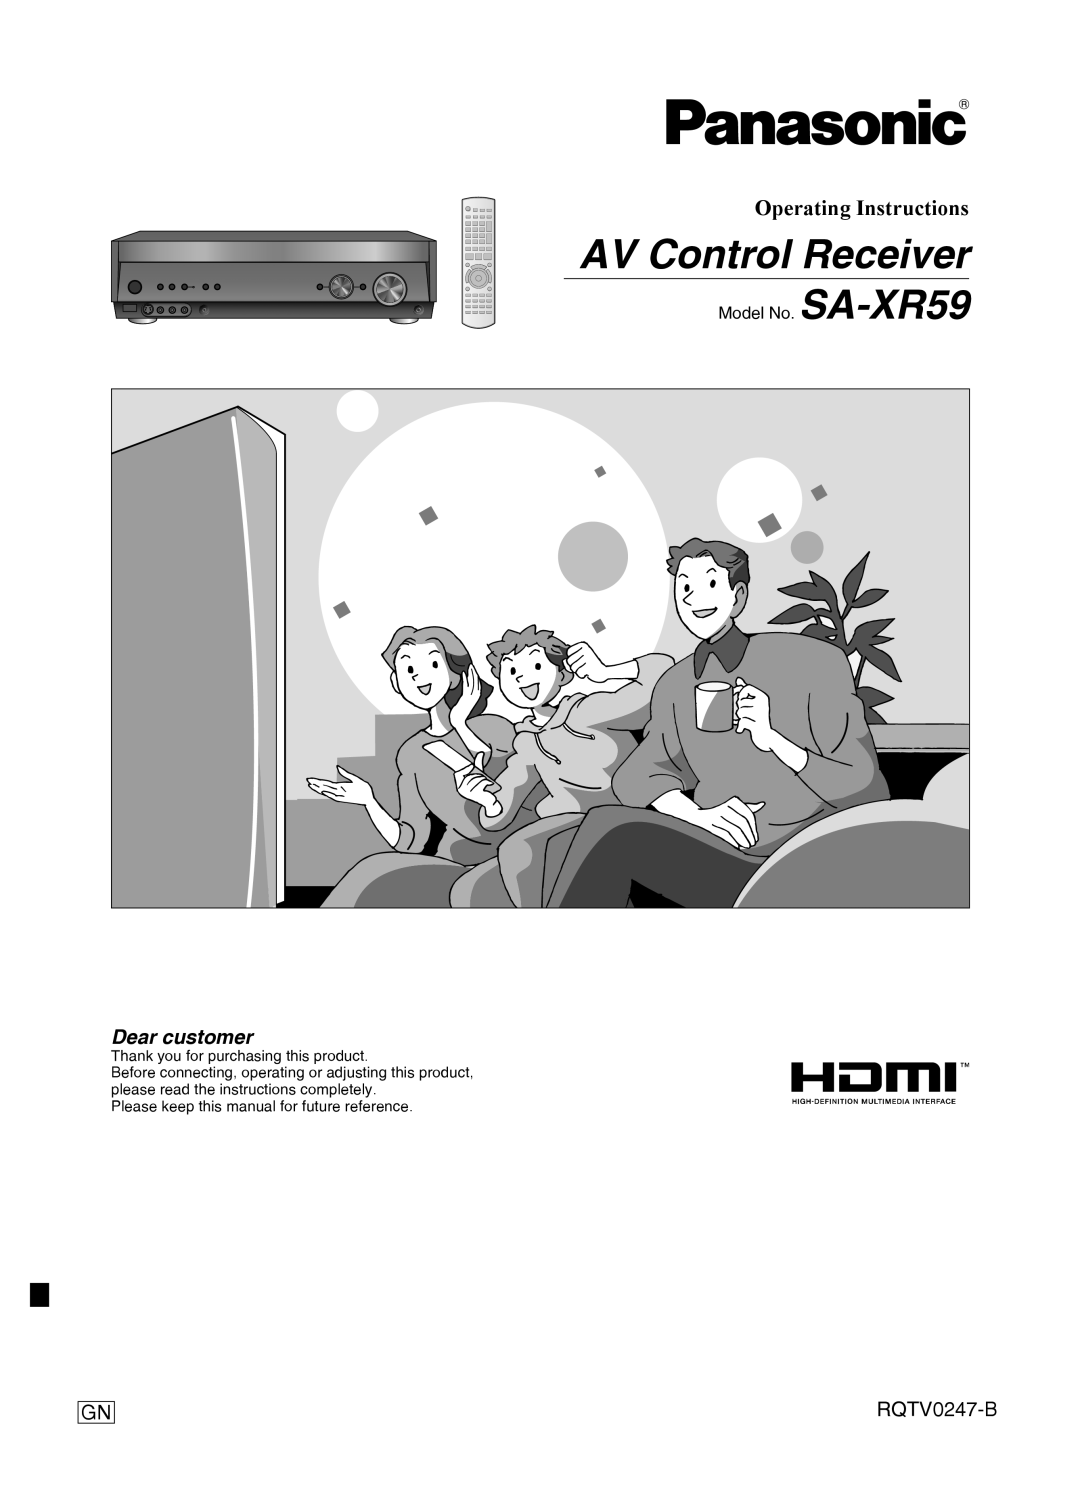 Panasonic manual Model No. SA-XR59, AV Control Receiver, Operating Instructions, RQTV0247-B 